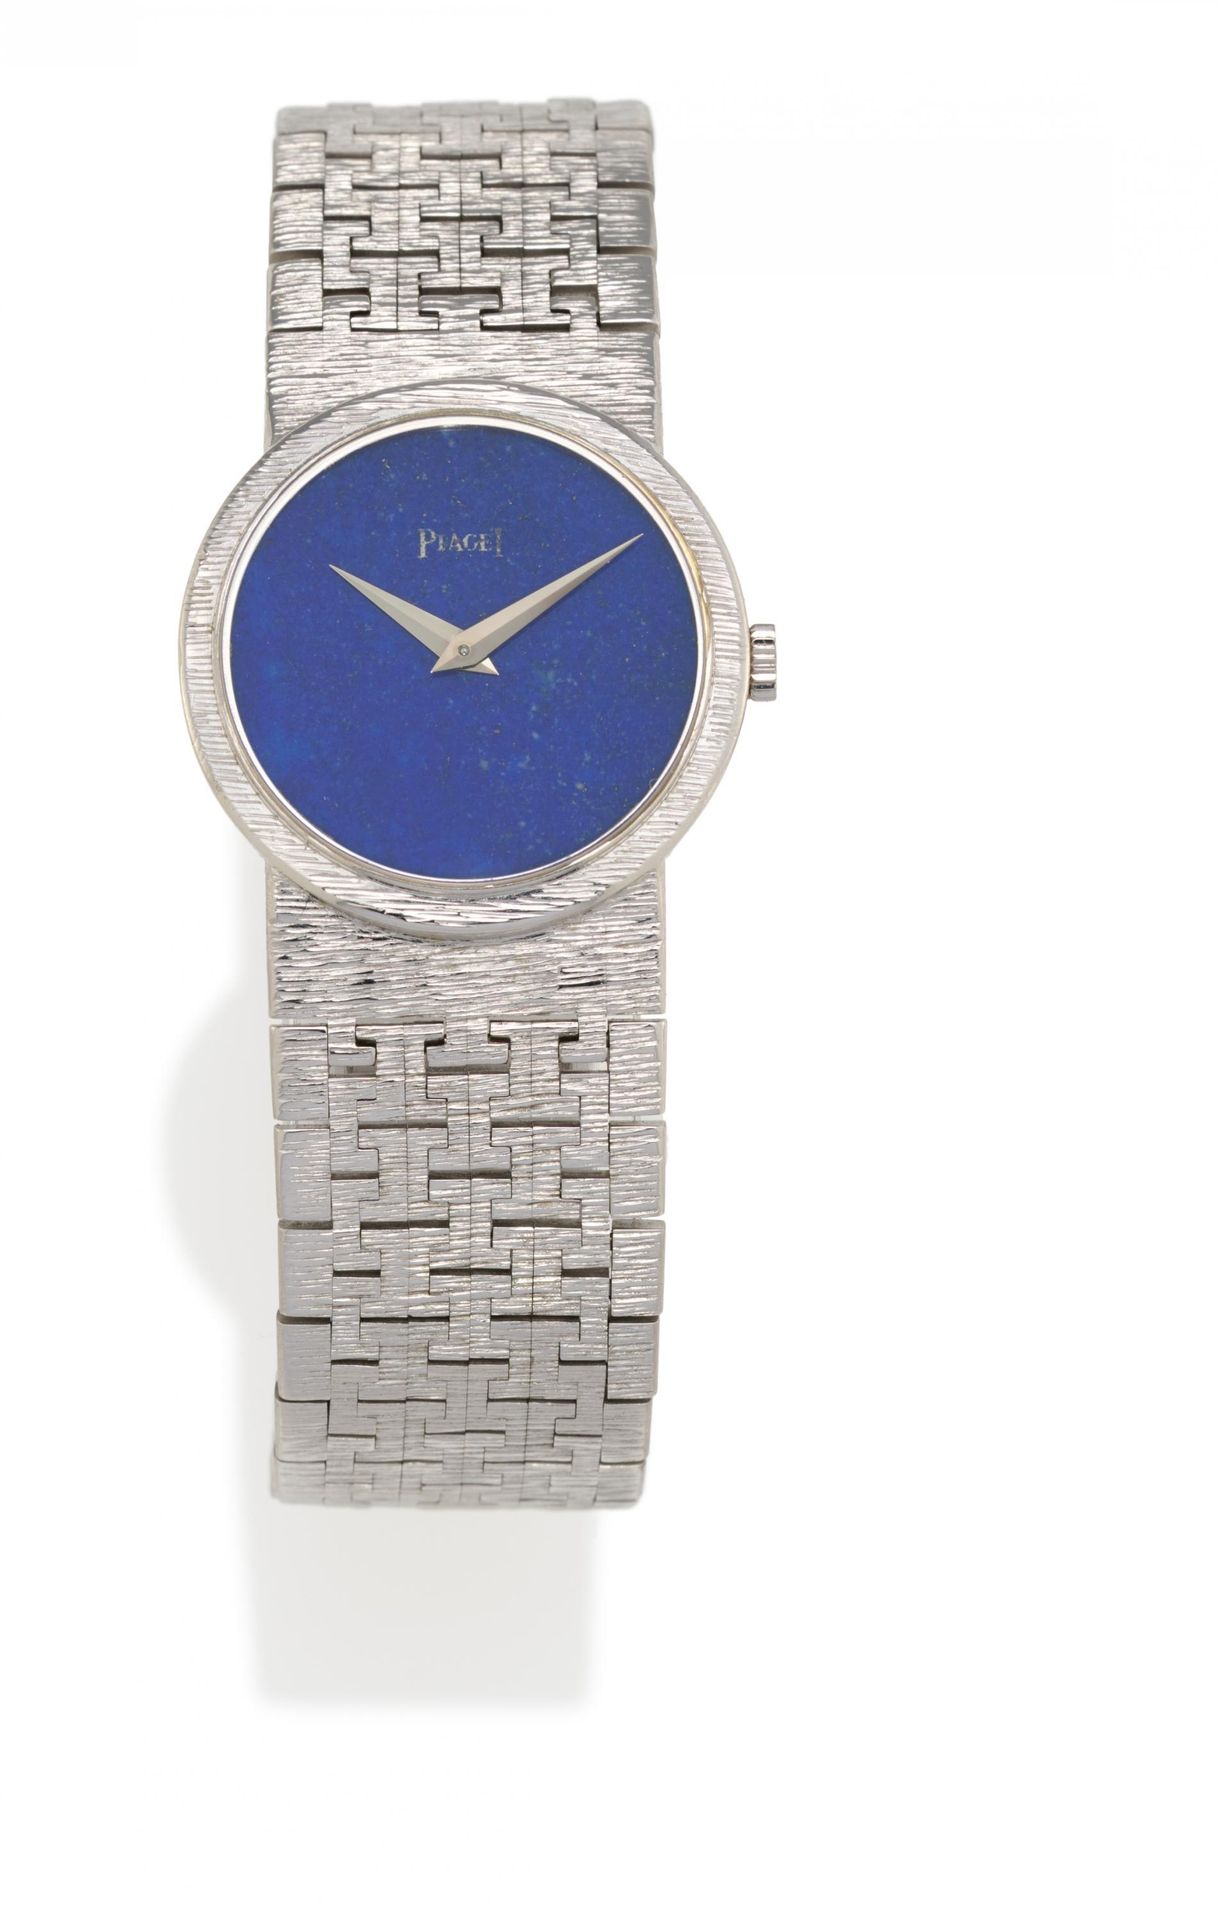 PIAGET PIAGET
Classique. Reloj de pulsera. 

Origen: Suiza. 
Fecha: Ca. 1970. 
M&hellip;